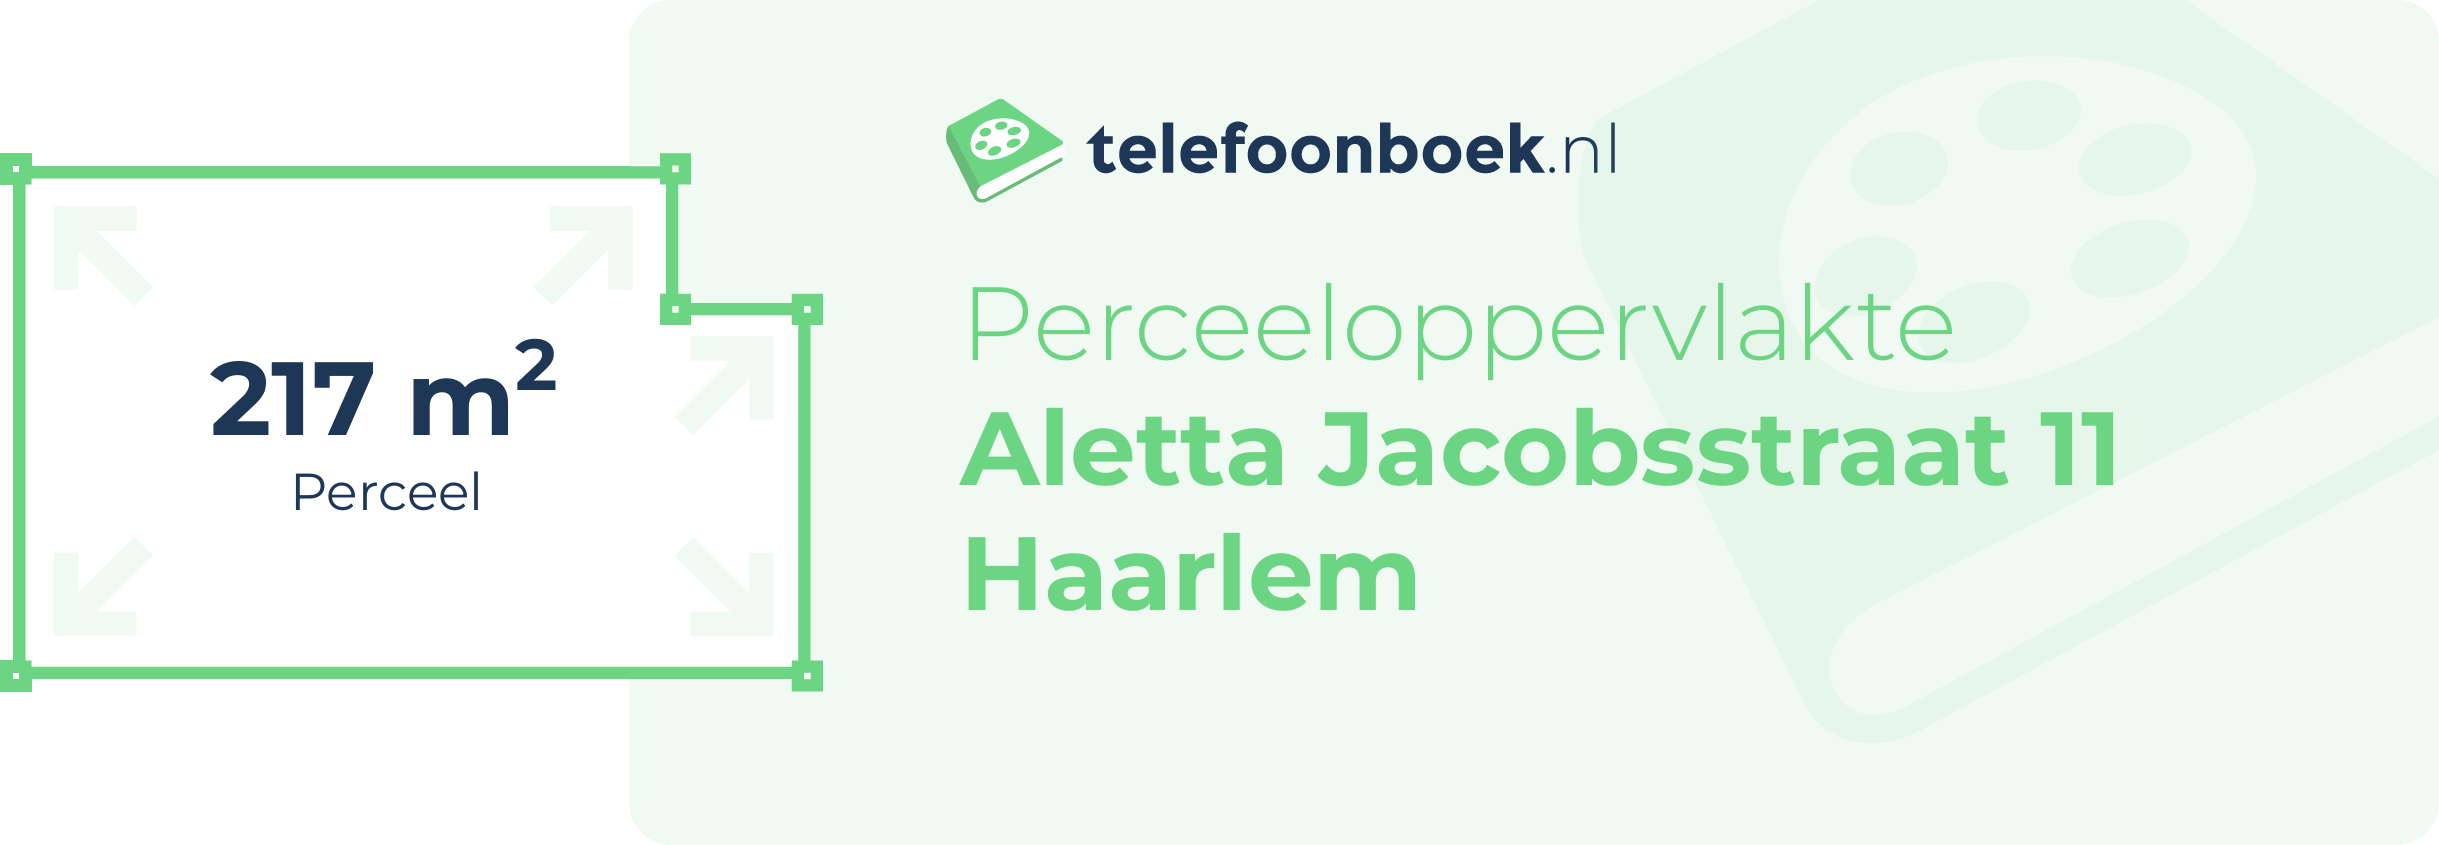 Perceeloppervlakte Aletta Jacobsstraat 11 Haarlem